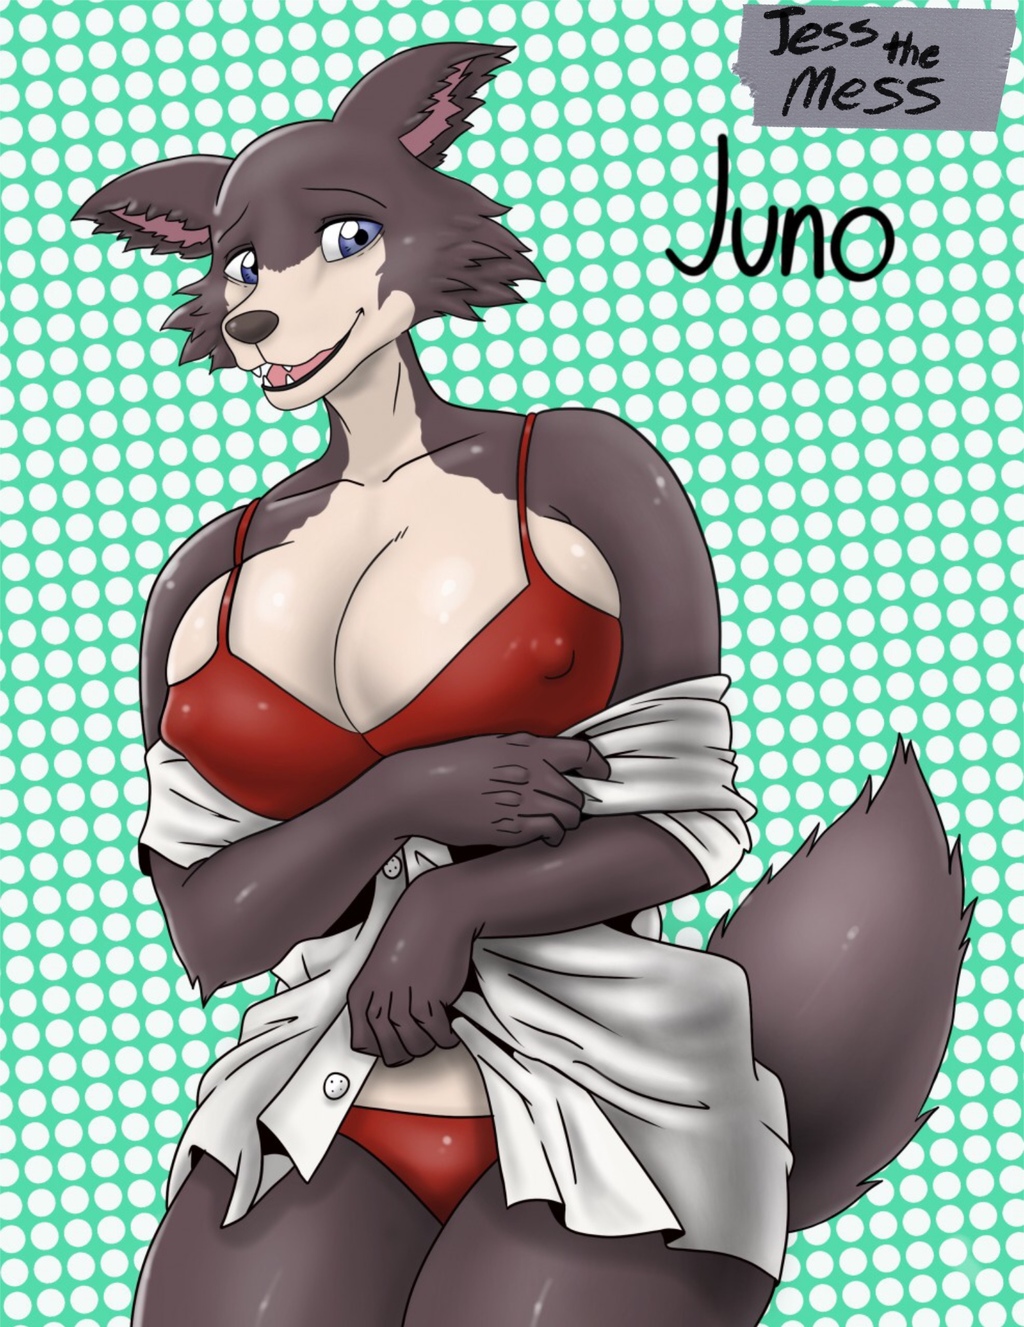 My Beloved Juno